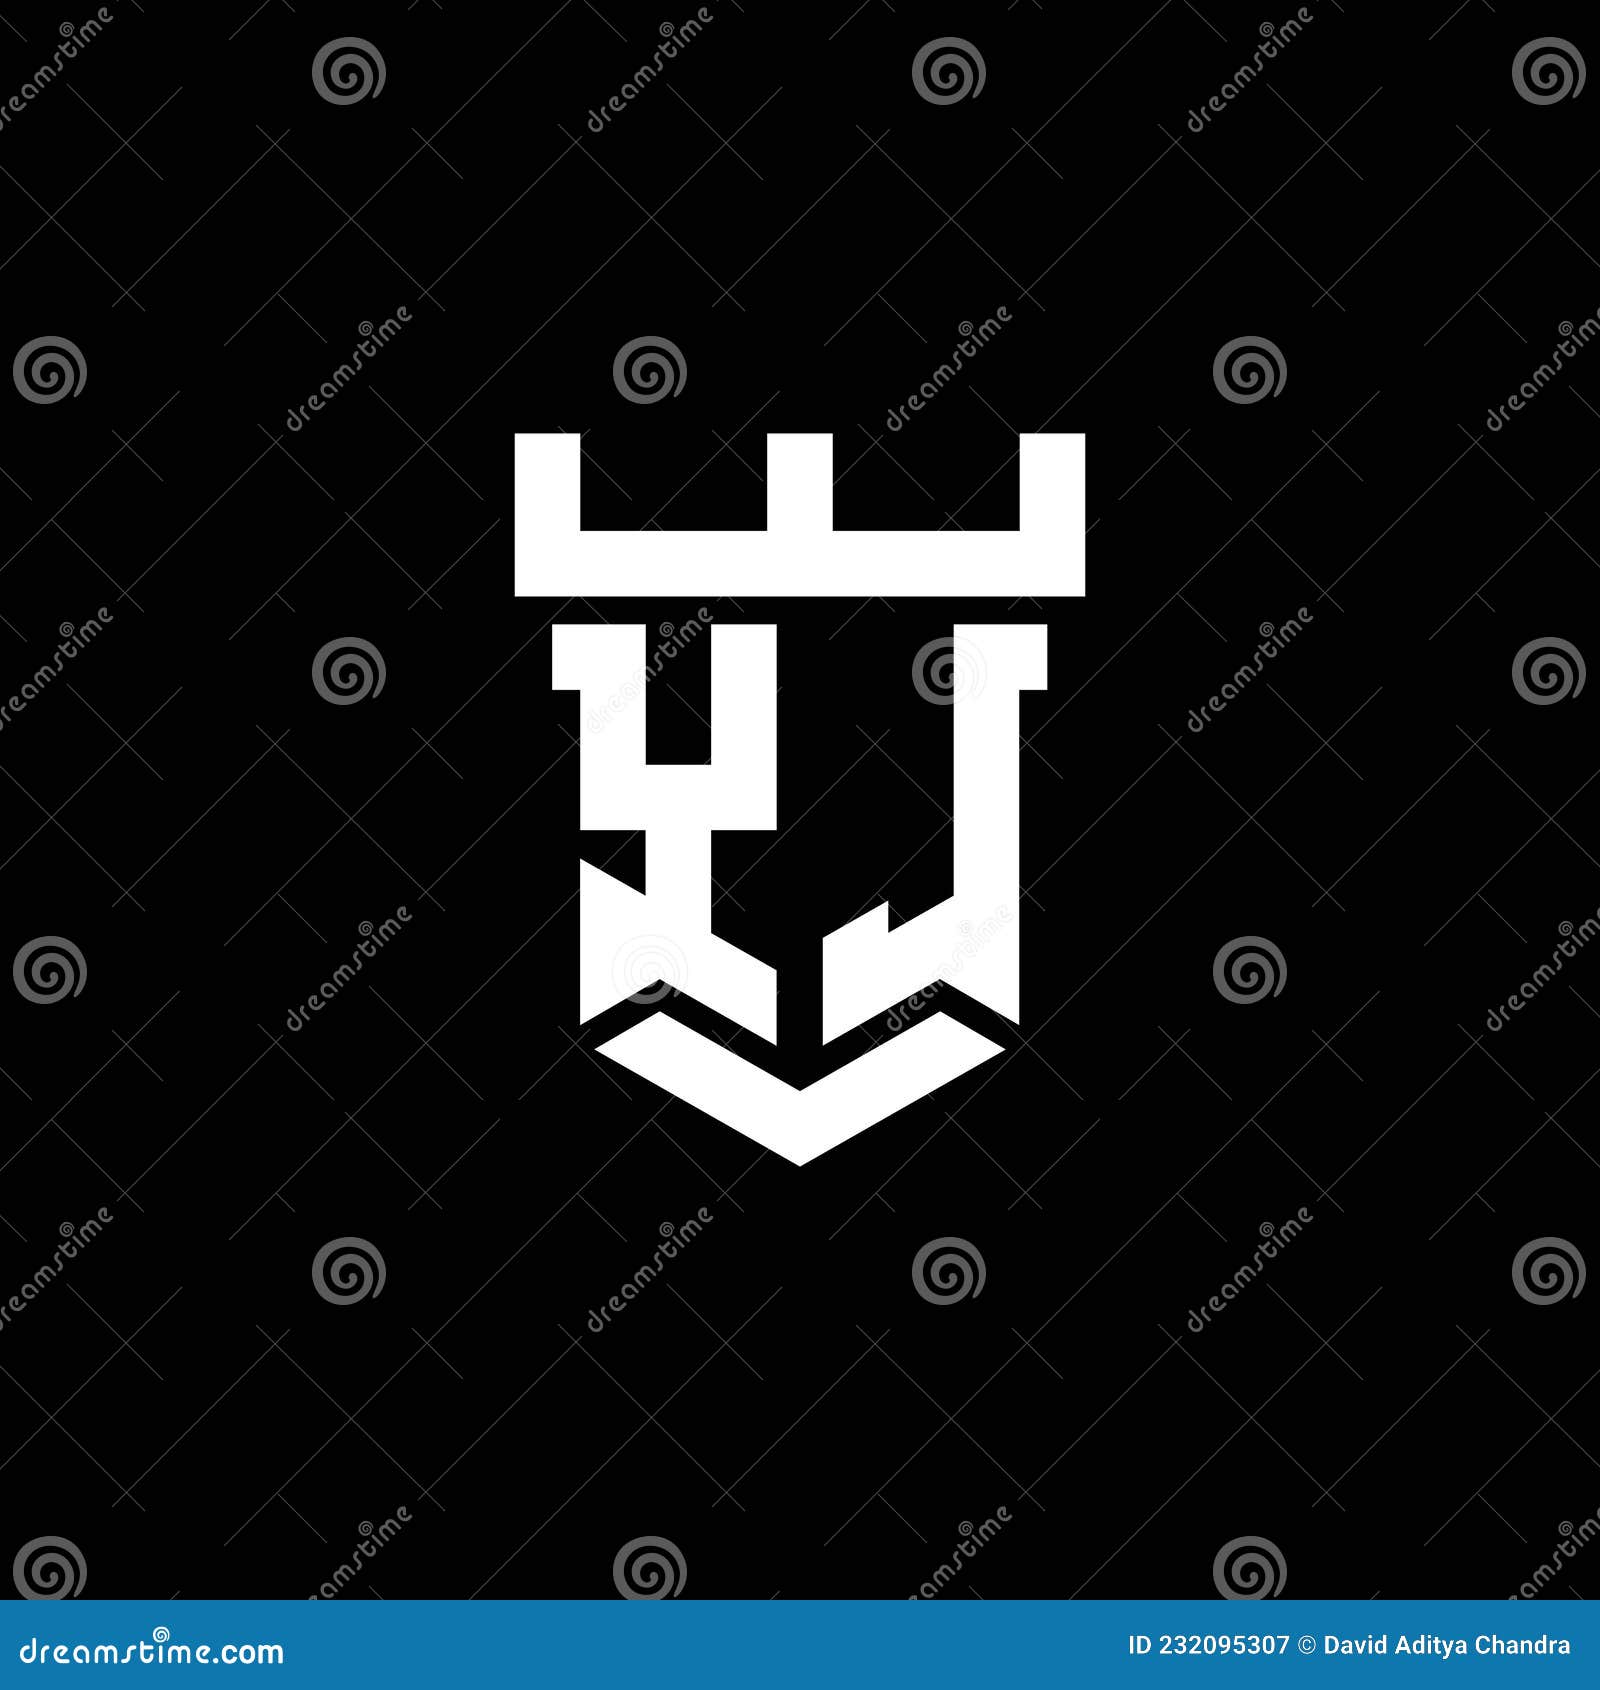 Yl Force 4 Logo PNG Transparent & SVG Vector - Freebie Supply